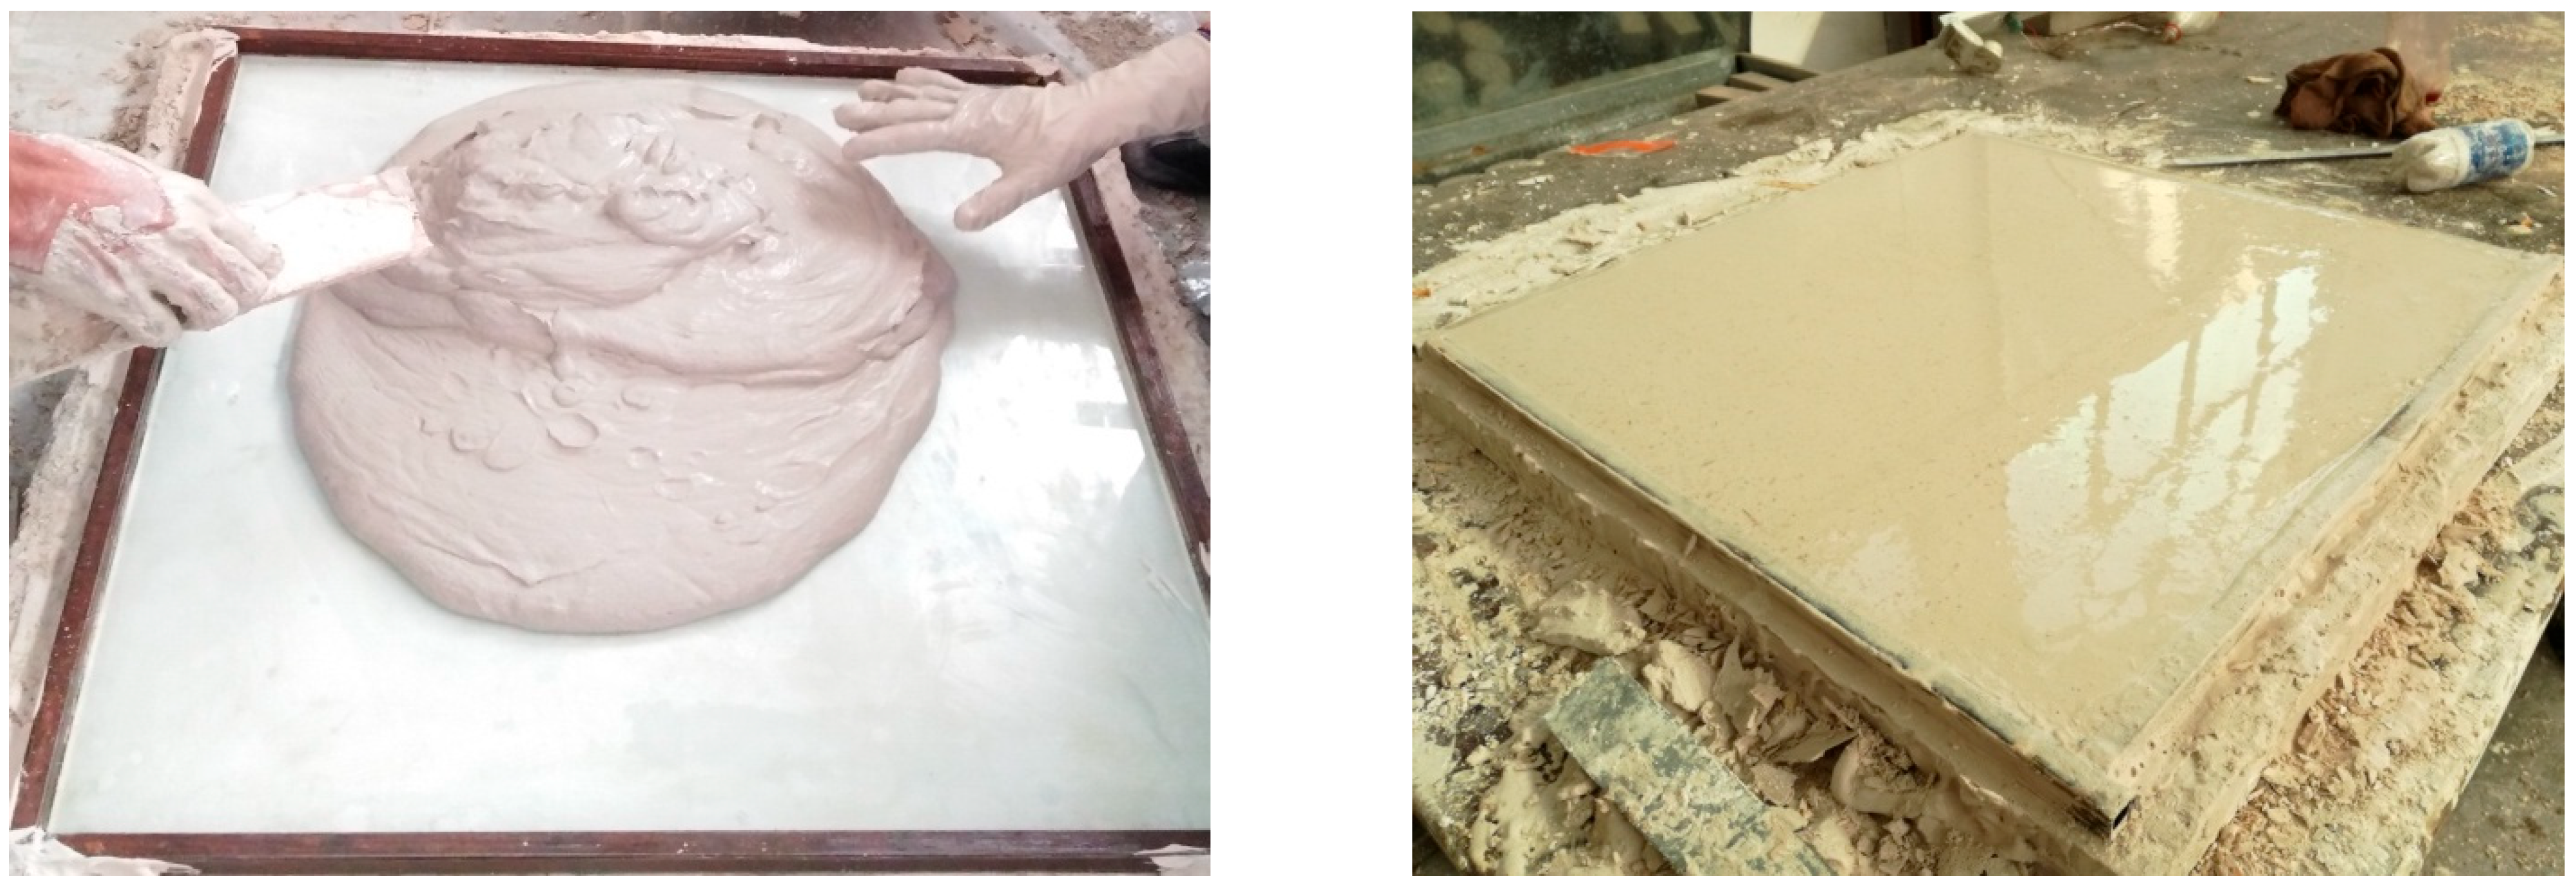 3 kg Plaster Of Paris (Gypsum Powder) for crack filling & tiles